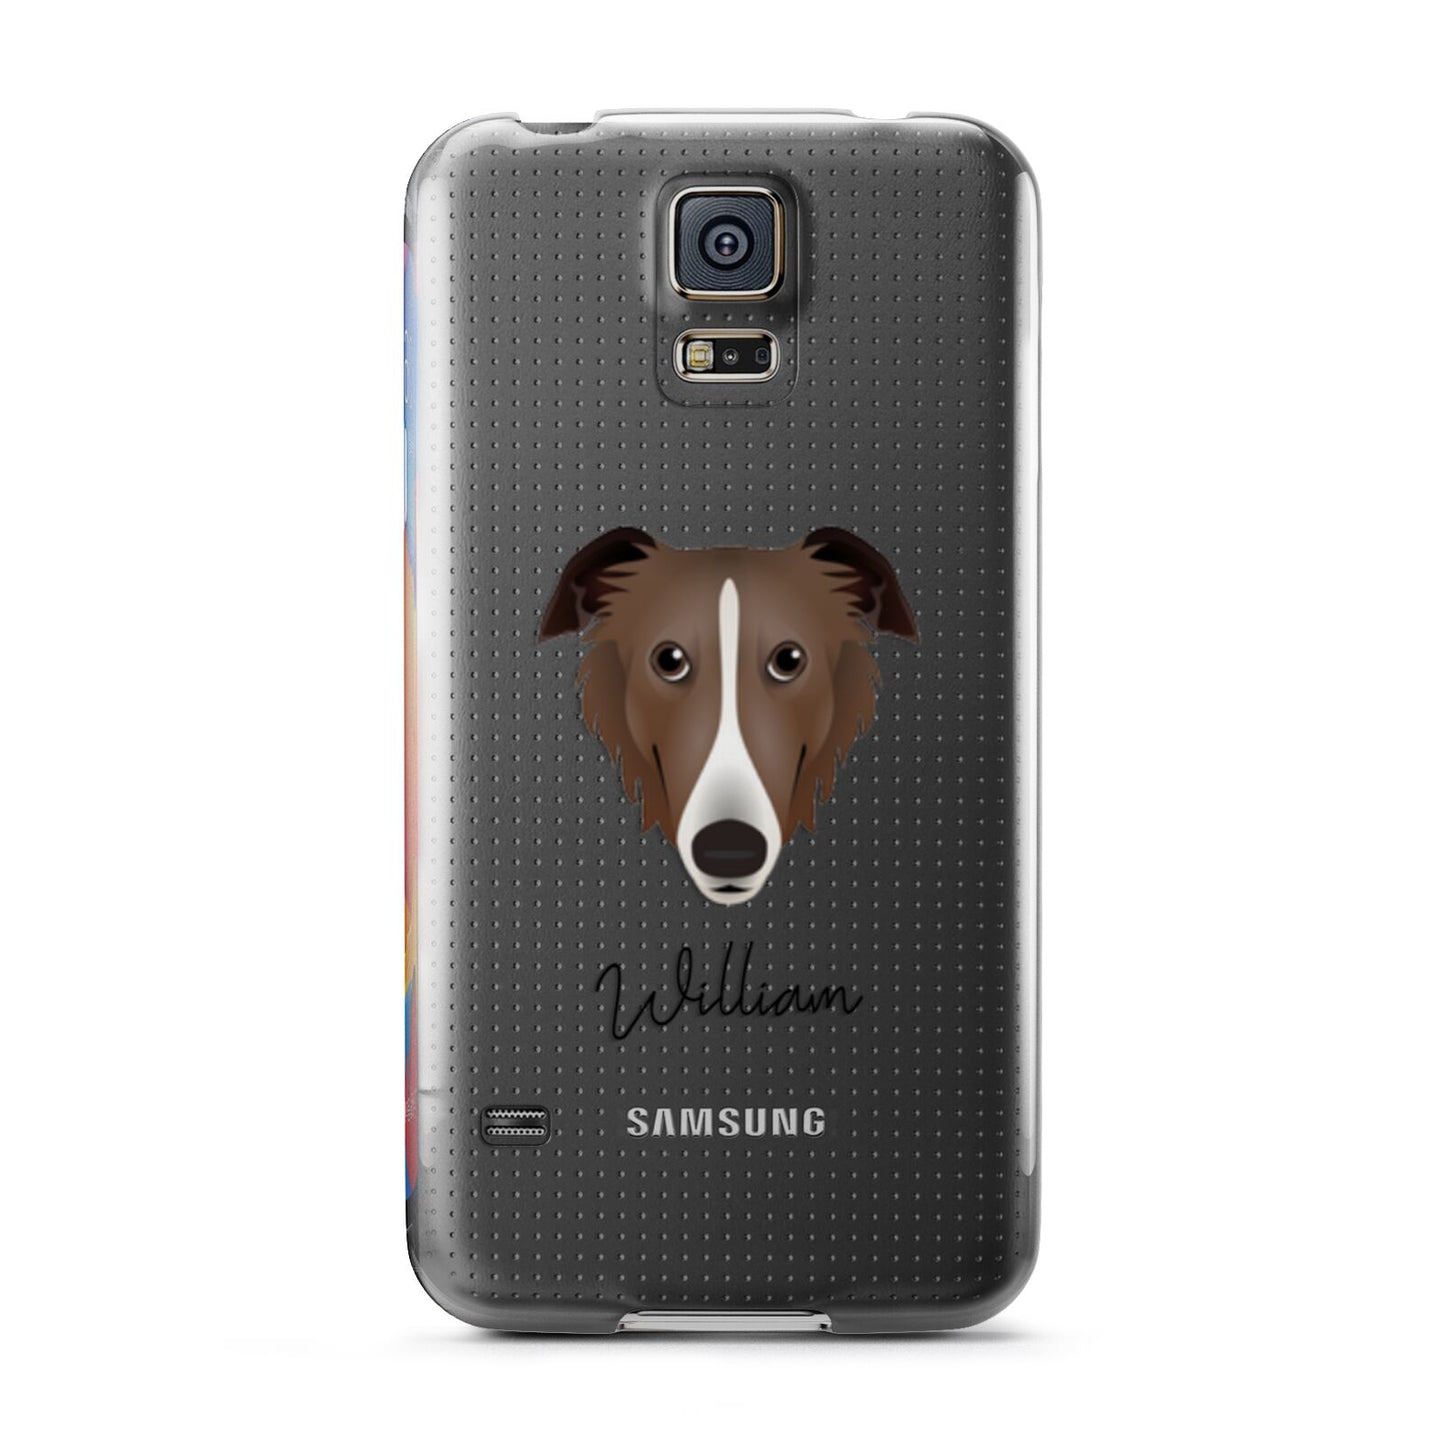 Borzoi Personalised Samsung Galaxy S5 Case